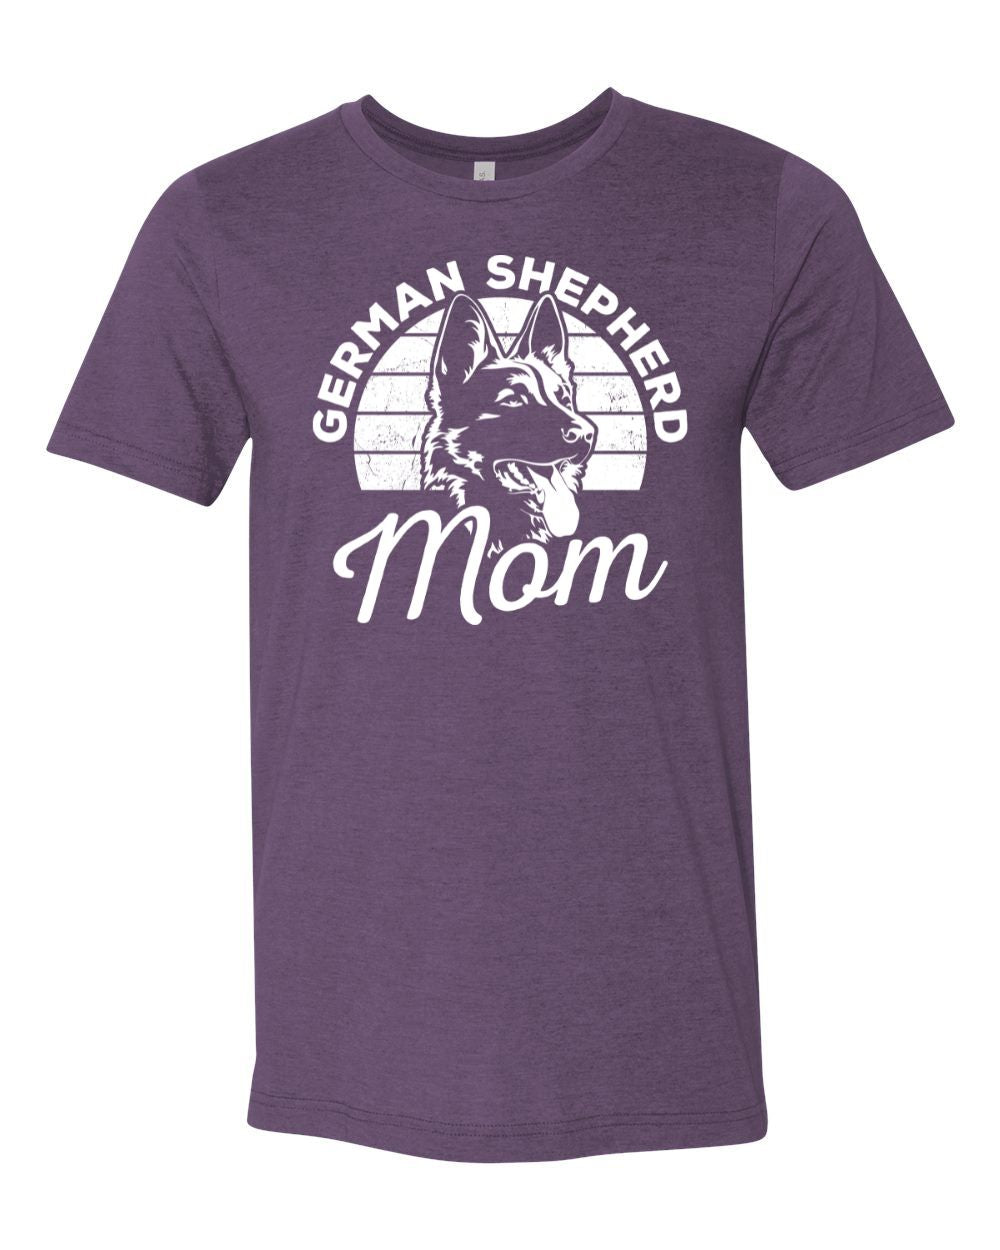 German Shepherd Mom T-Shirt